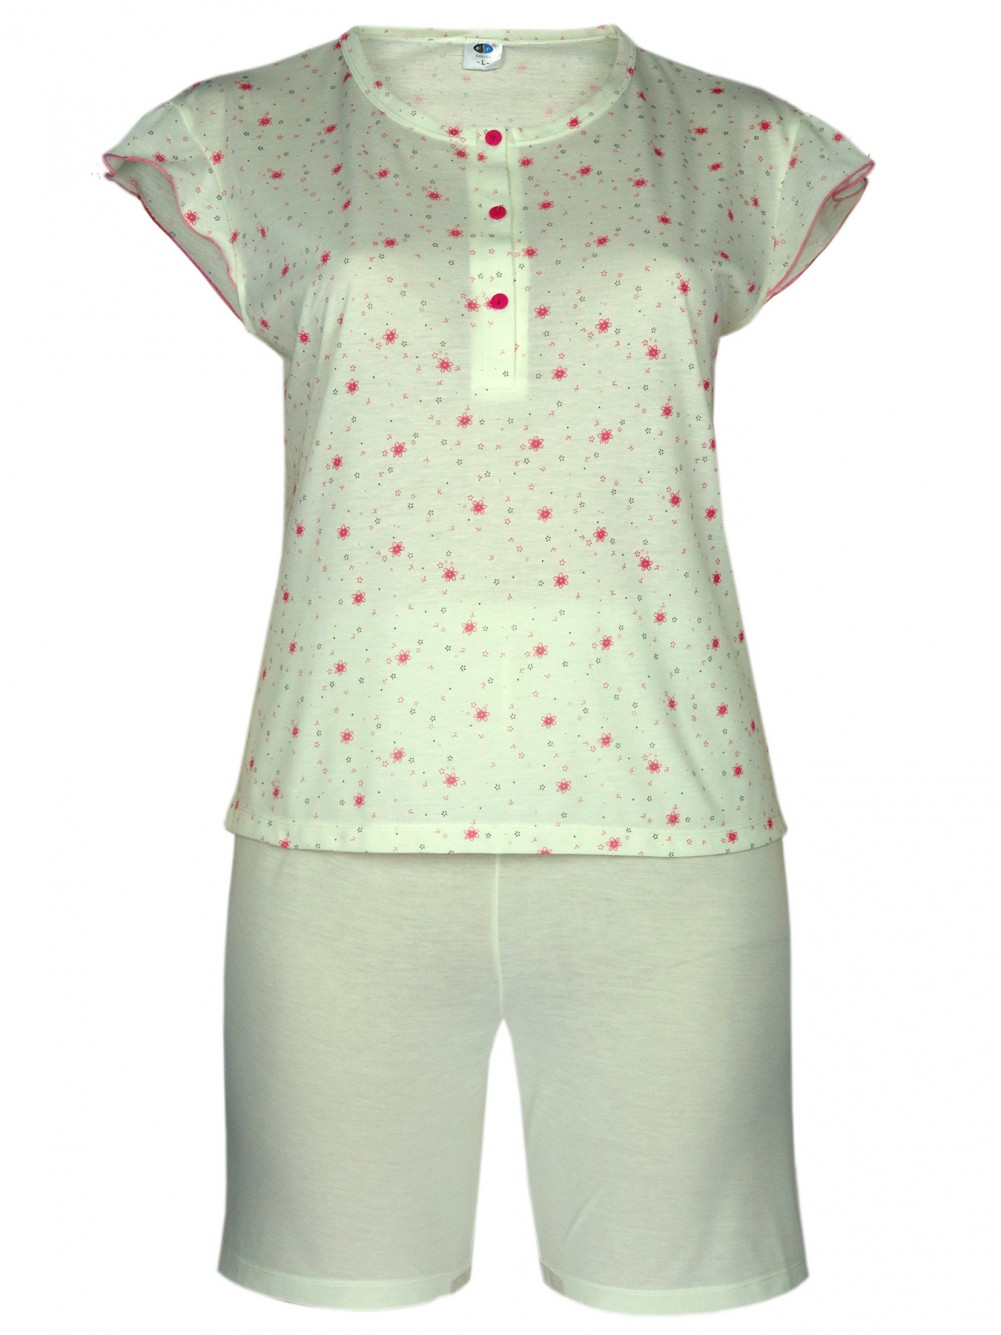 Damen Kurz-Pyjama, Shorty Set 100% Baumwolle - Zitronengelb